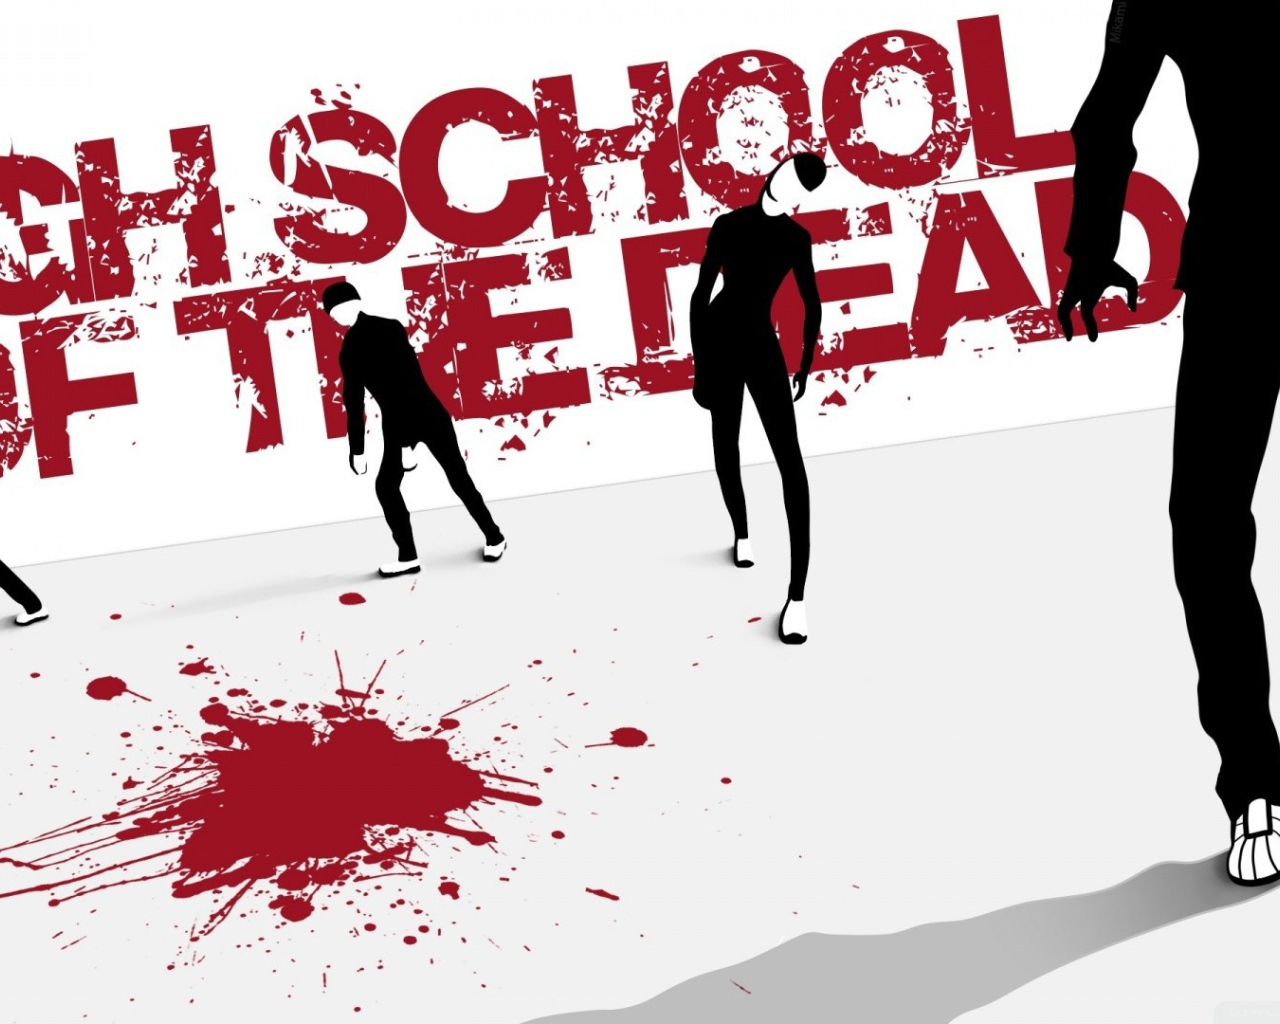 Лужа крови на постере аниме Школа Мертвецов